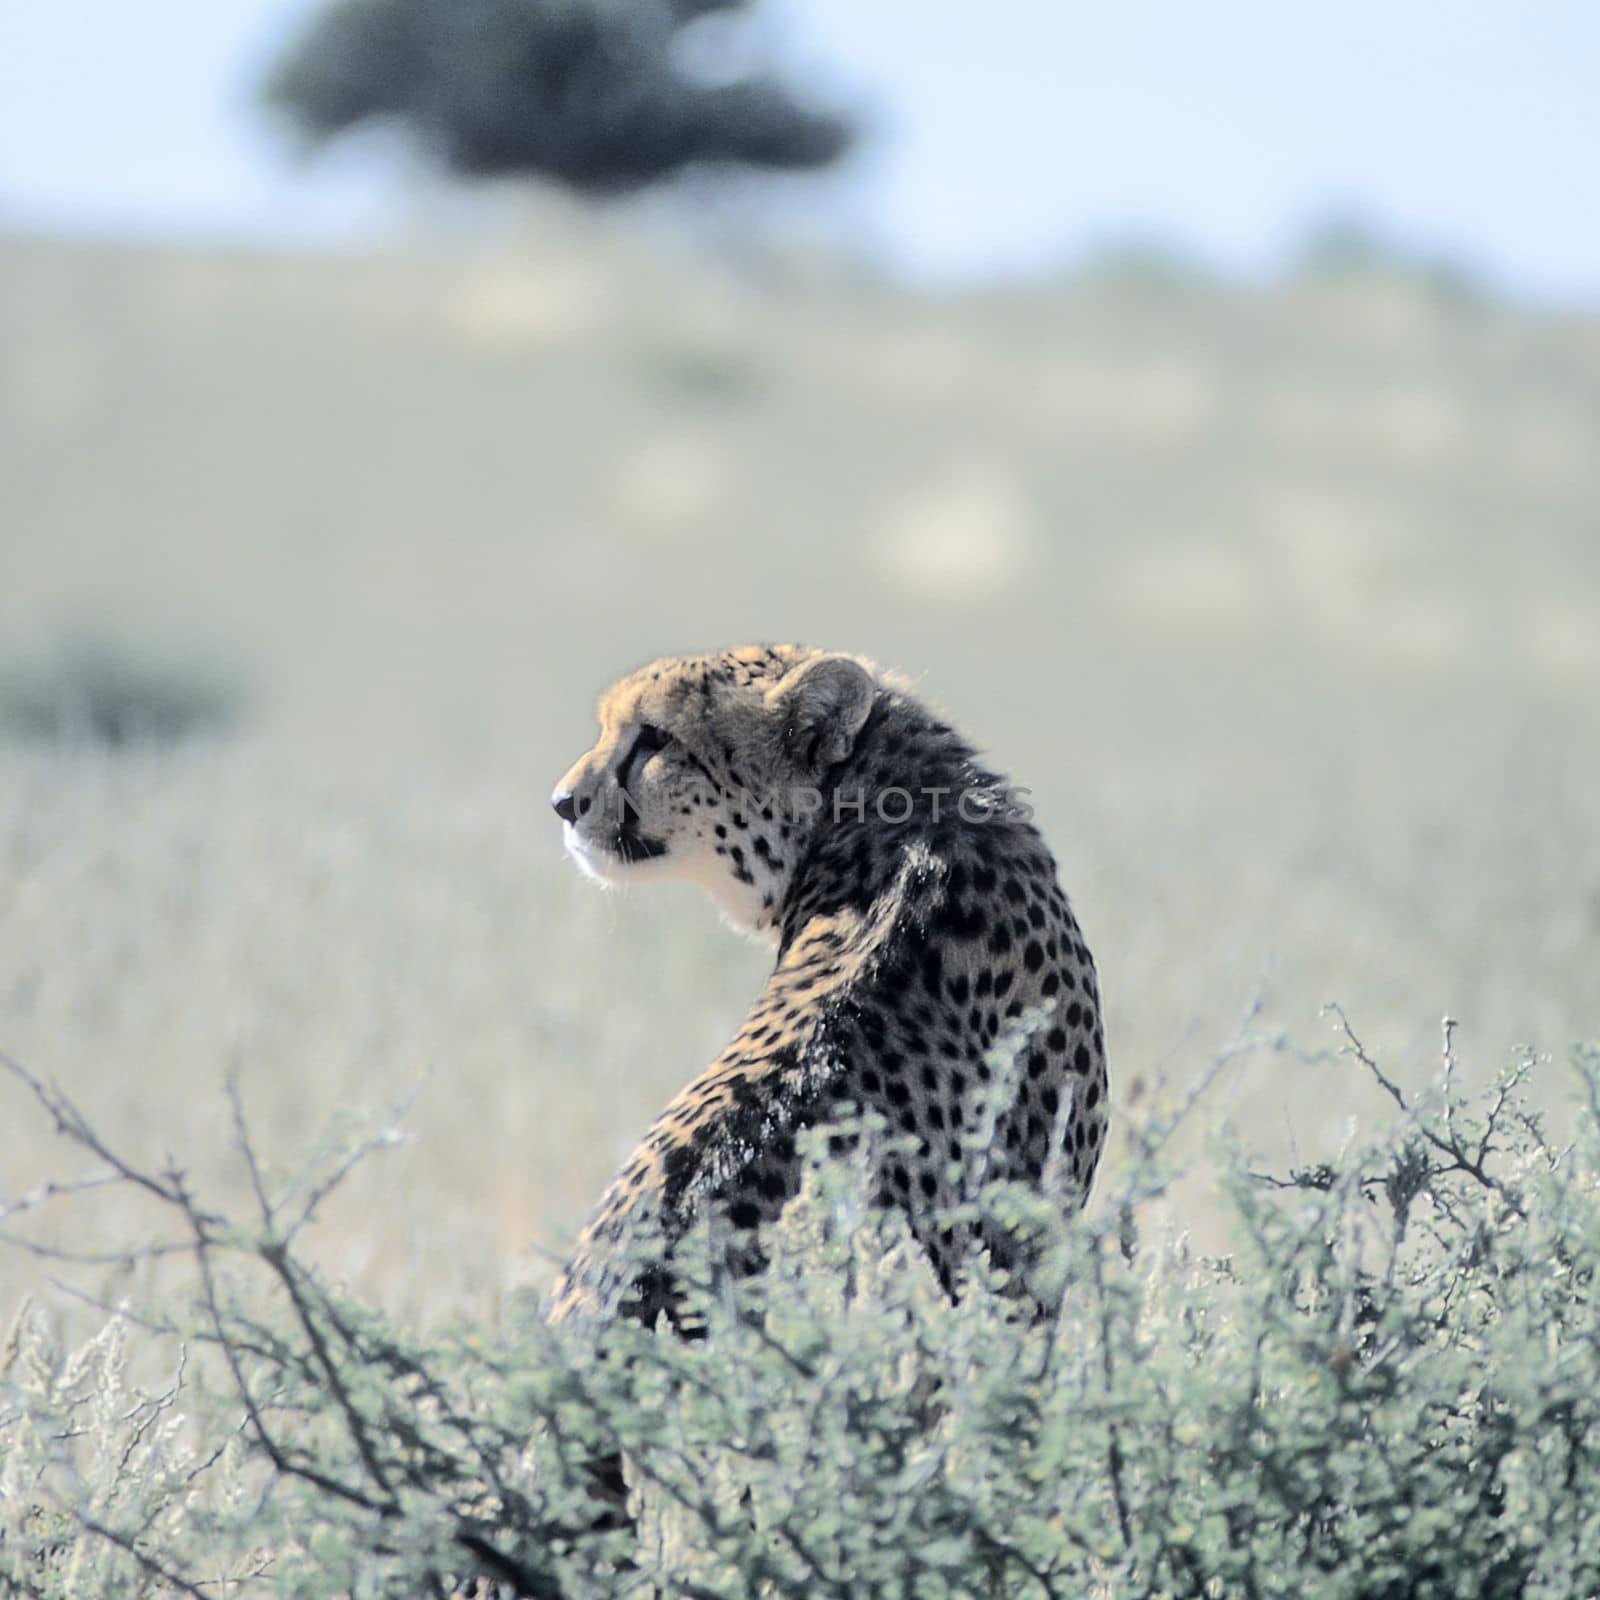 Cheetah by Giamplume